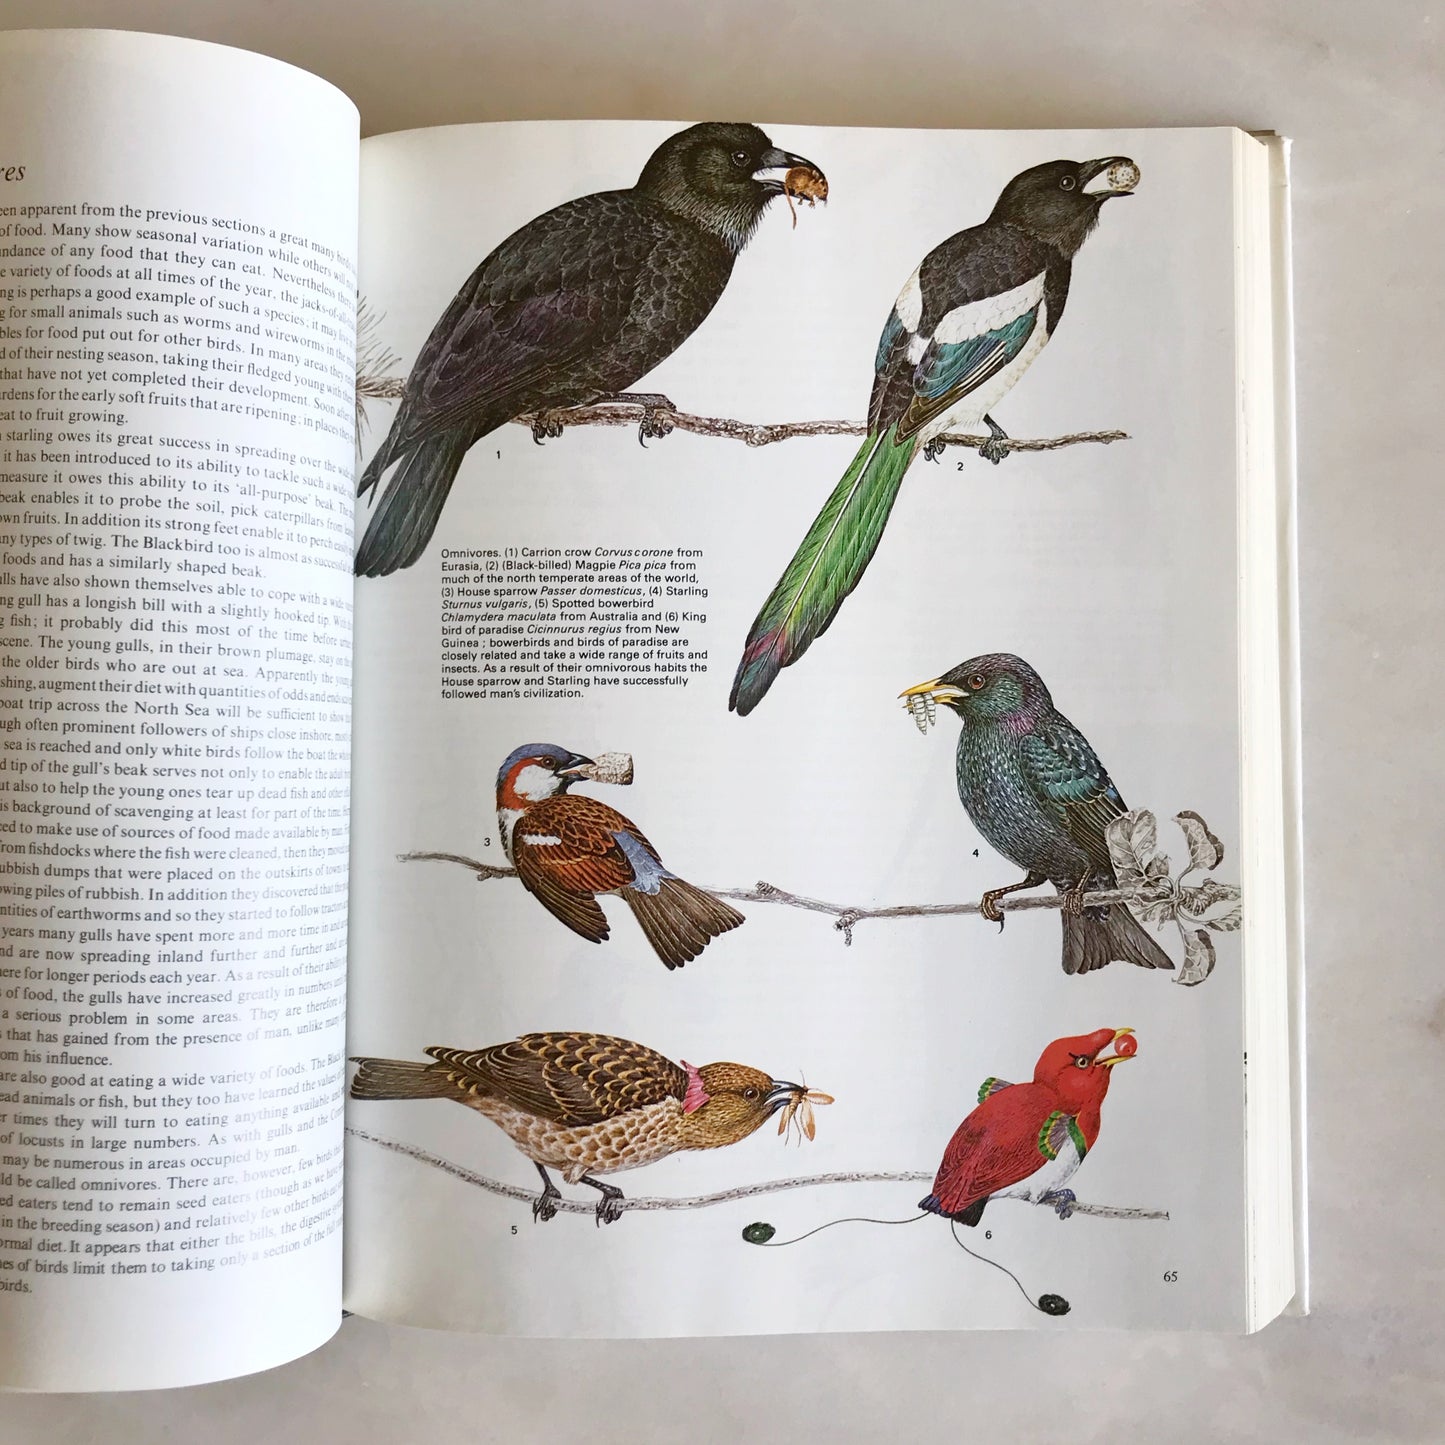 BIRDS: Their Life, Their Ways, Their World